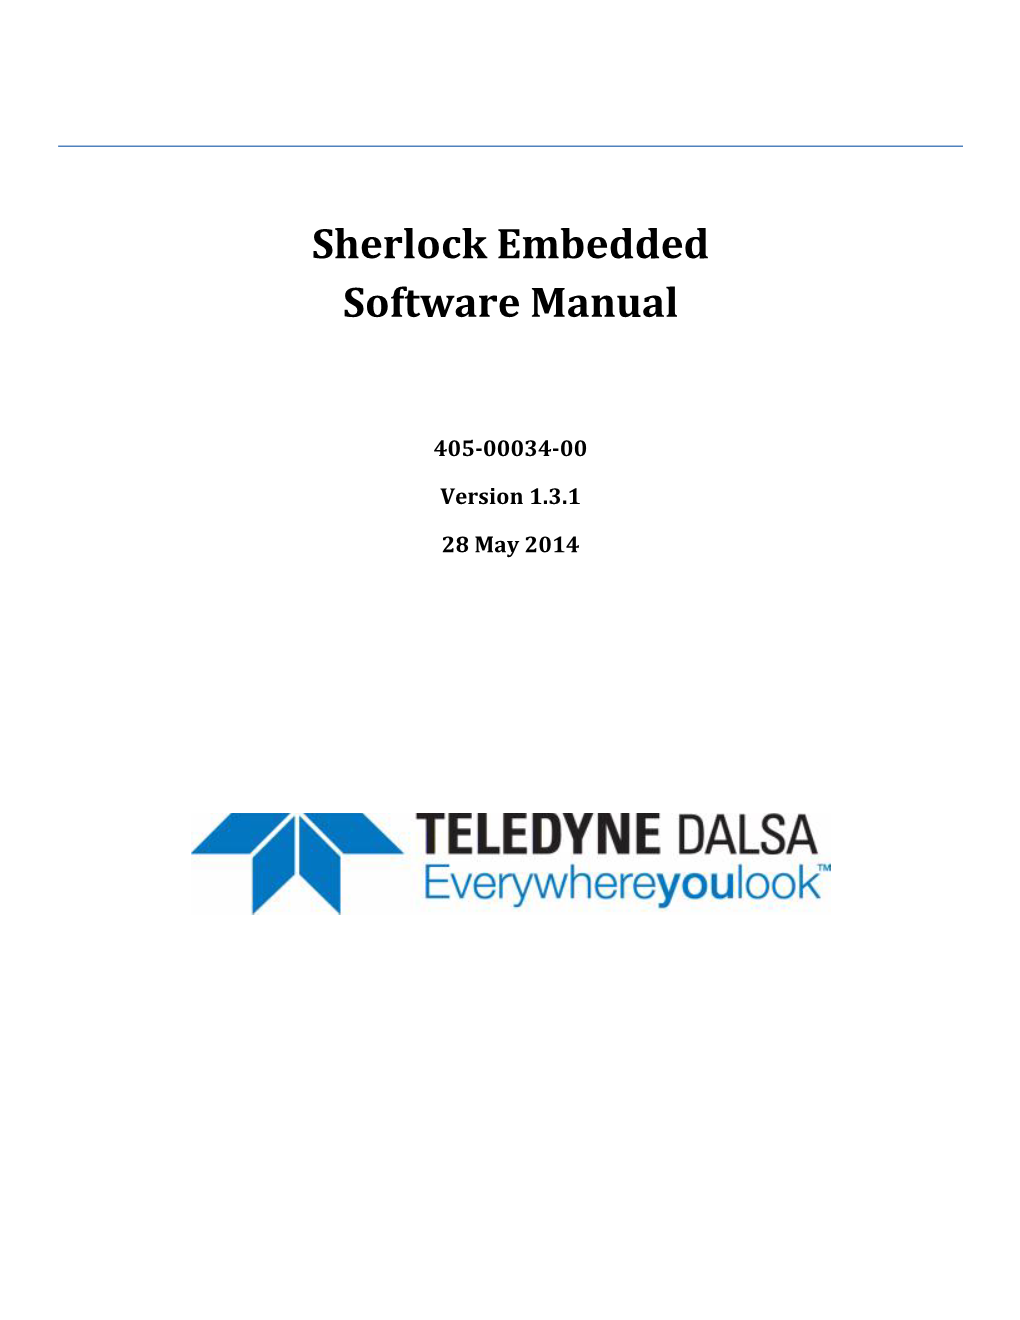 Sherlock Embedded Software Manual